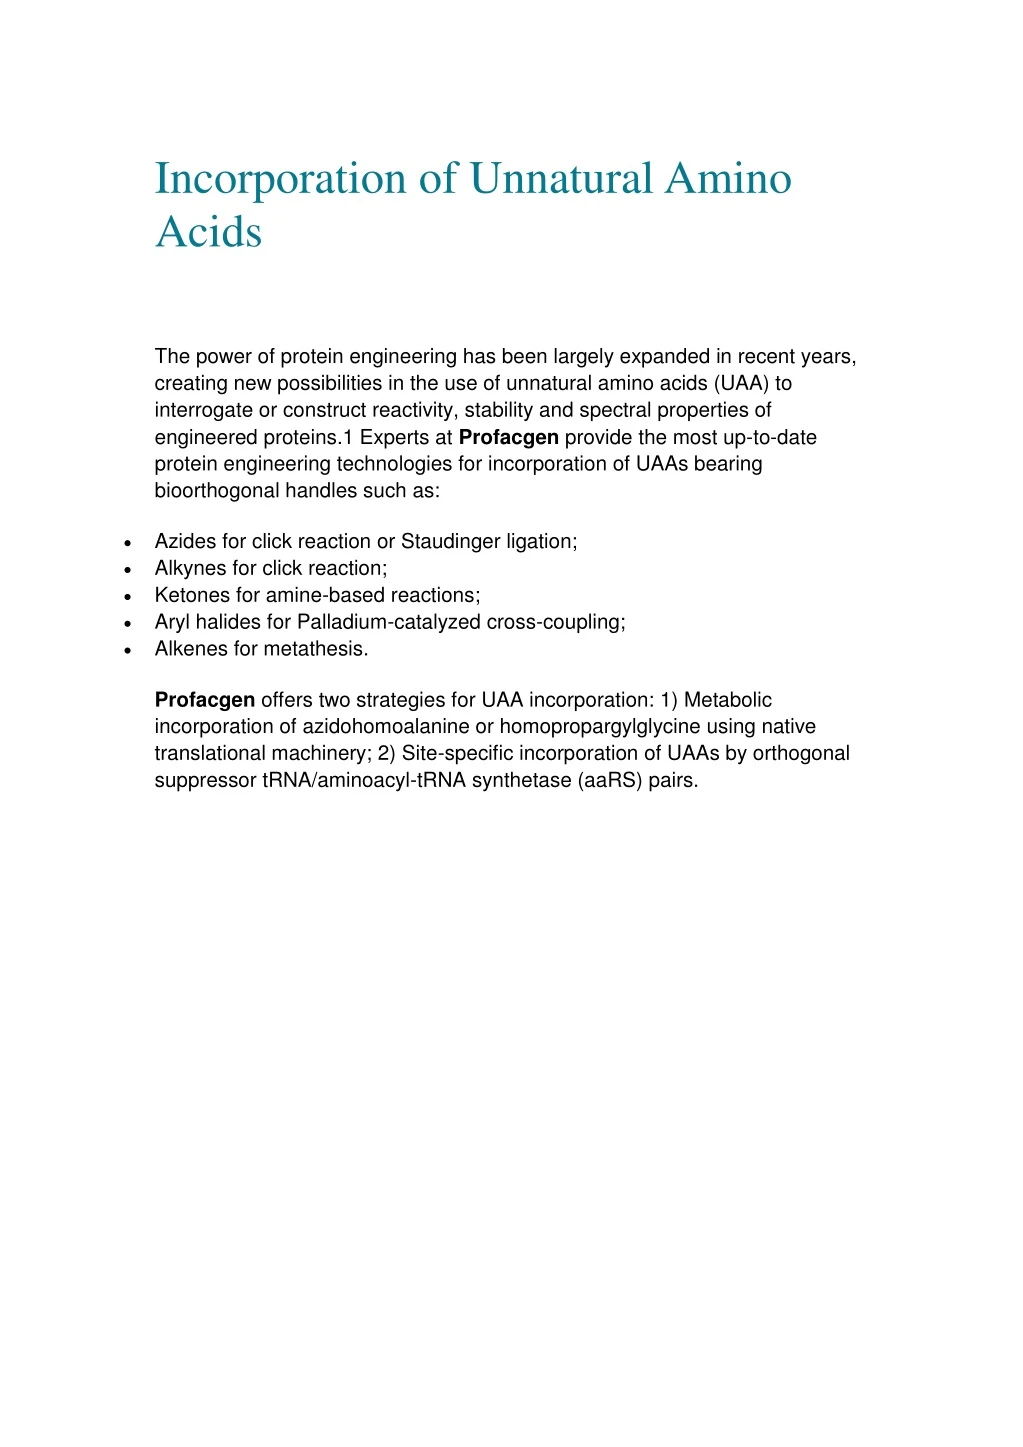 incorporation of unnatural amino acids